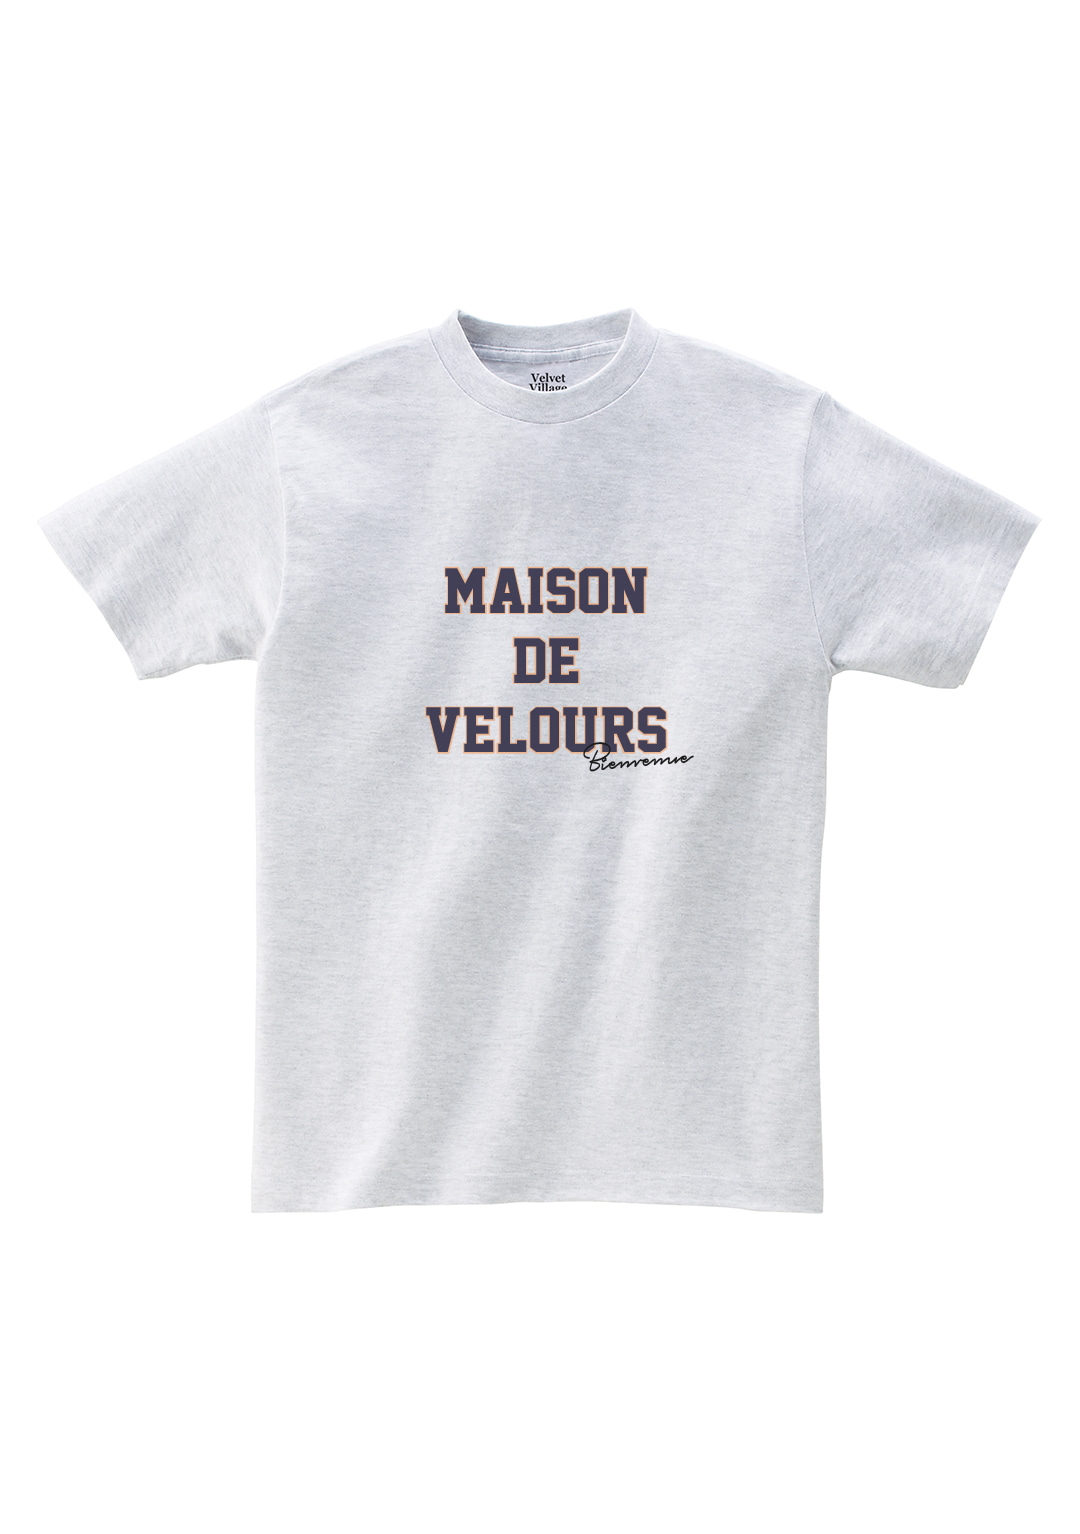 Maison Velours T-shirt (Melange Grey)